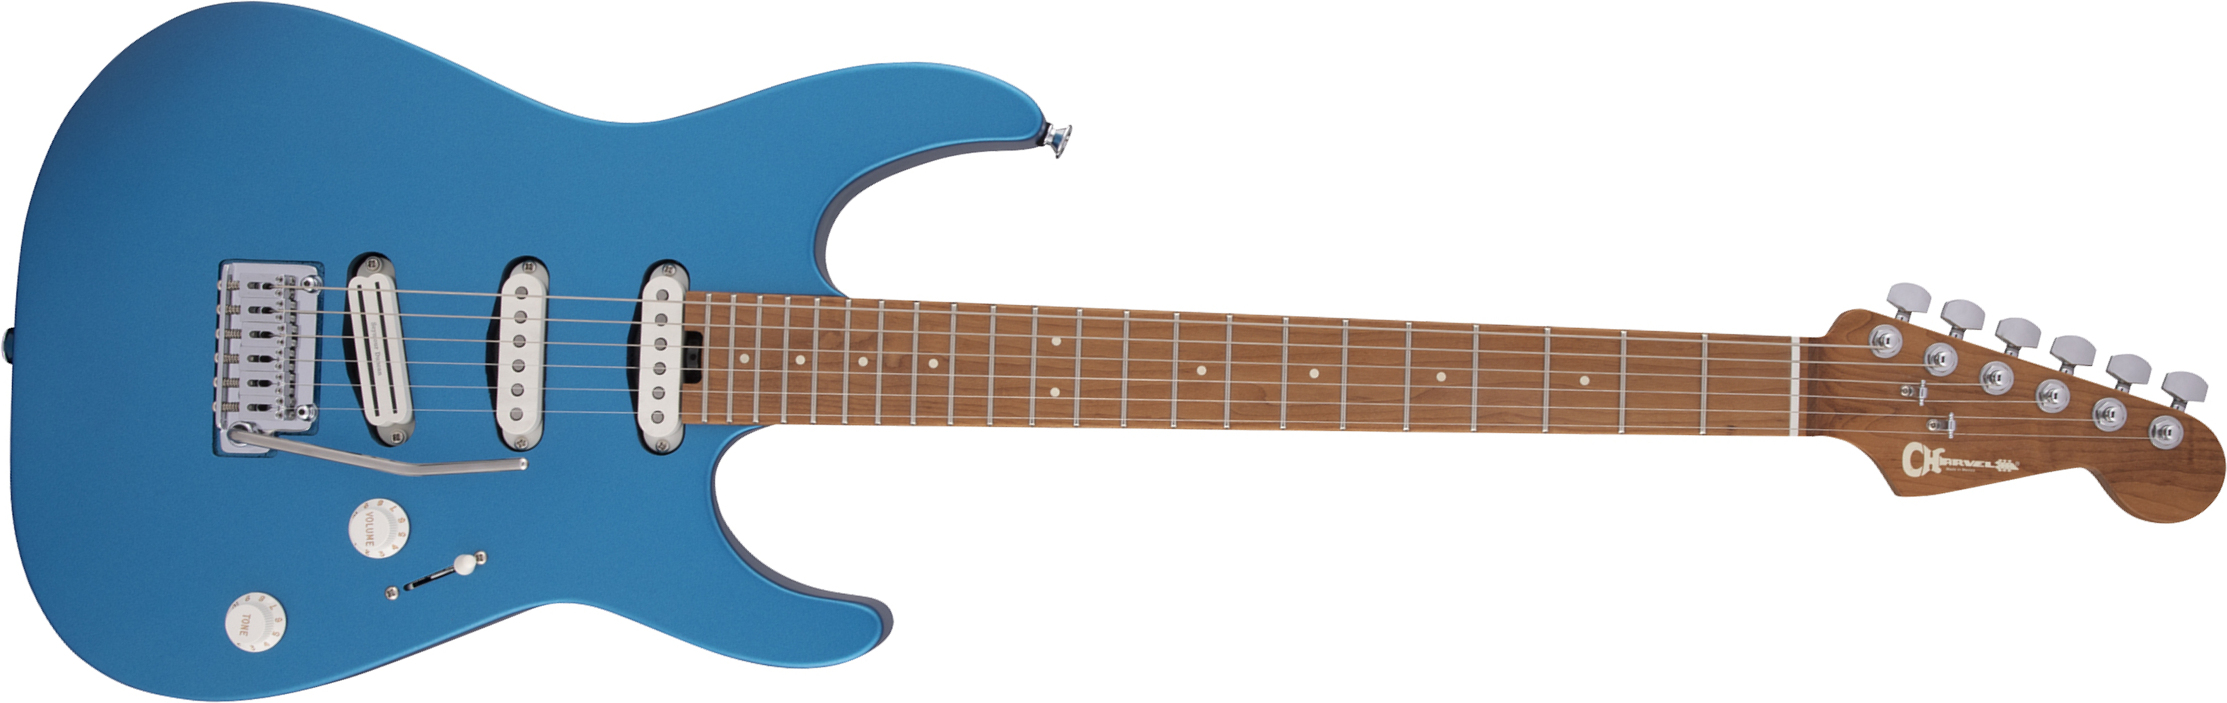 Charvel Dinky Dk22 Sss 2pt Cm Pro-mod 3s Seymour Duncan Mn - Electric Blue - E-Gitarre aus Metall - Main picture